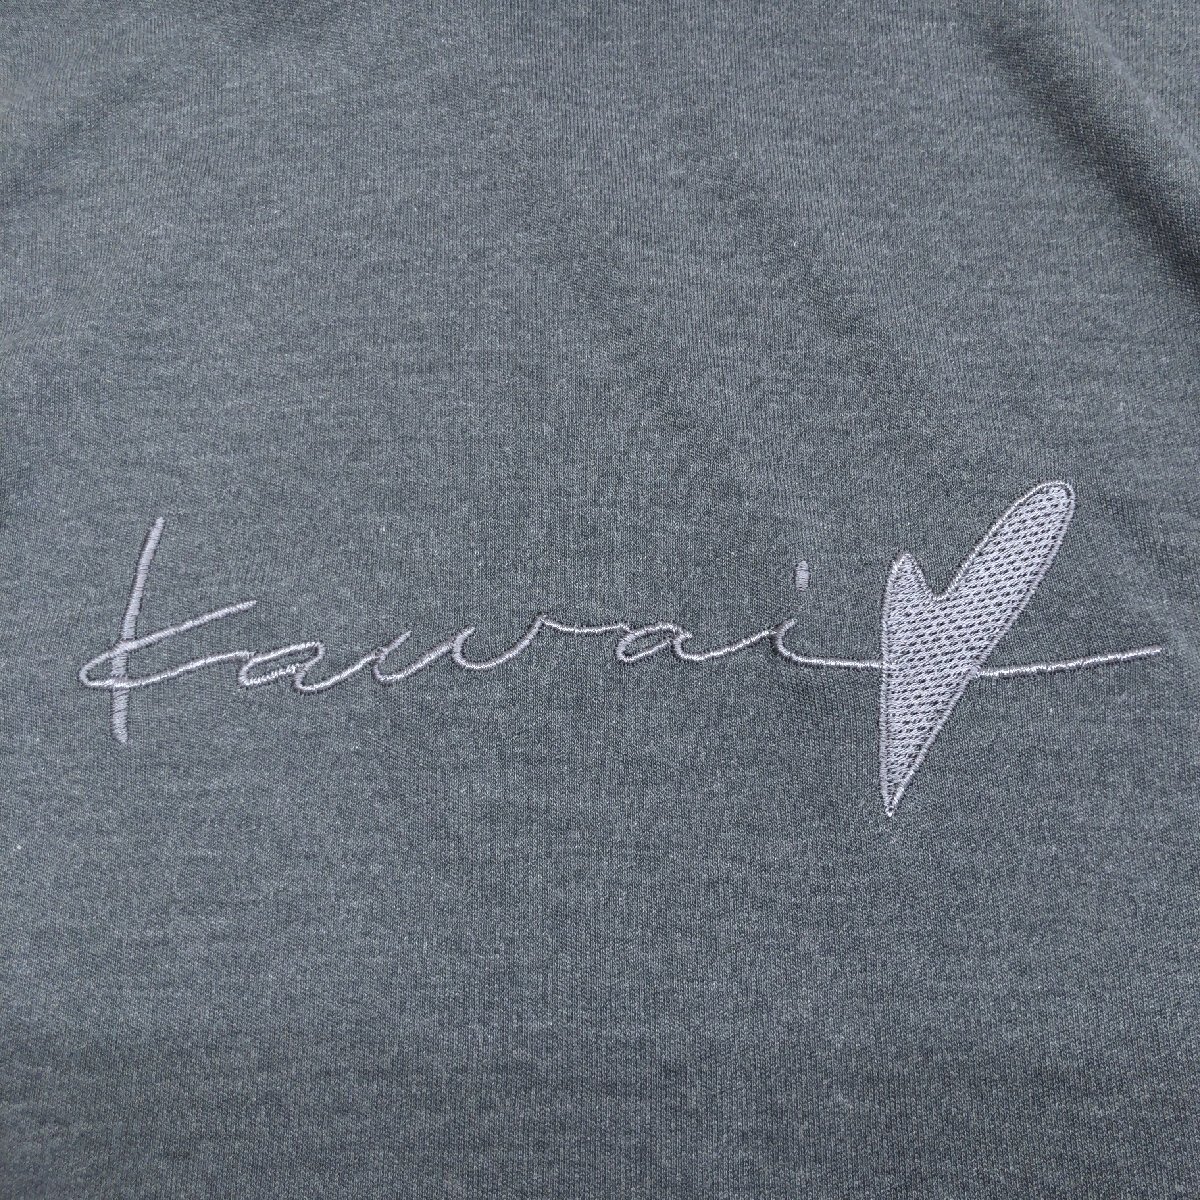  новый товар KAWAI OKADA Kawai okada Logo вышивка ta-toru шея cut and sewn LL темно-серый long T футболка XL 2L свободно большой женский не использовался 